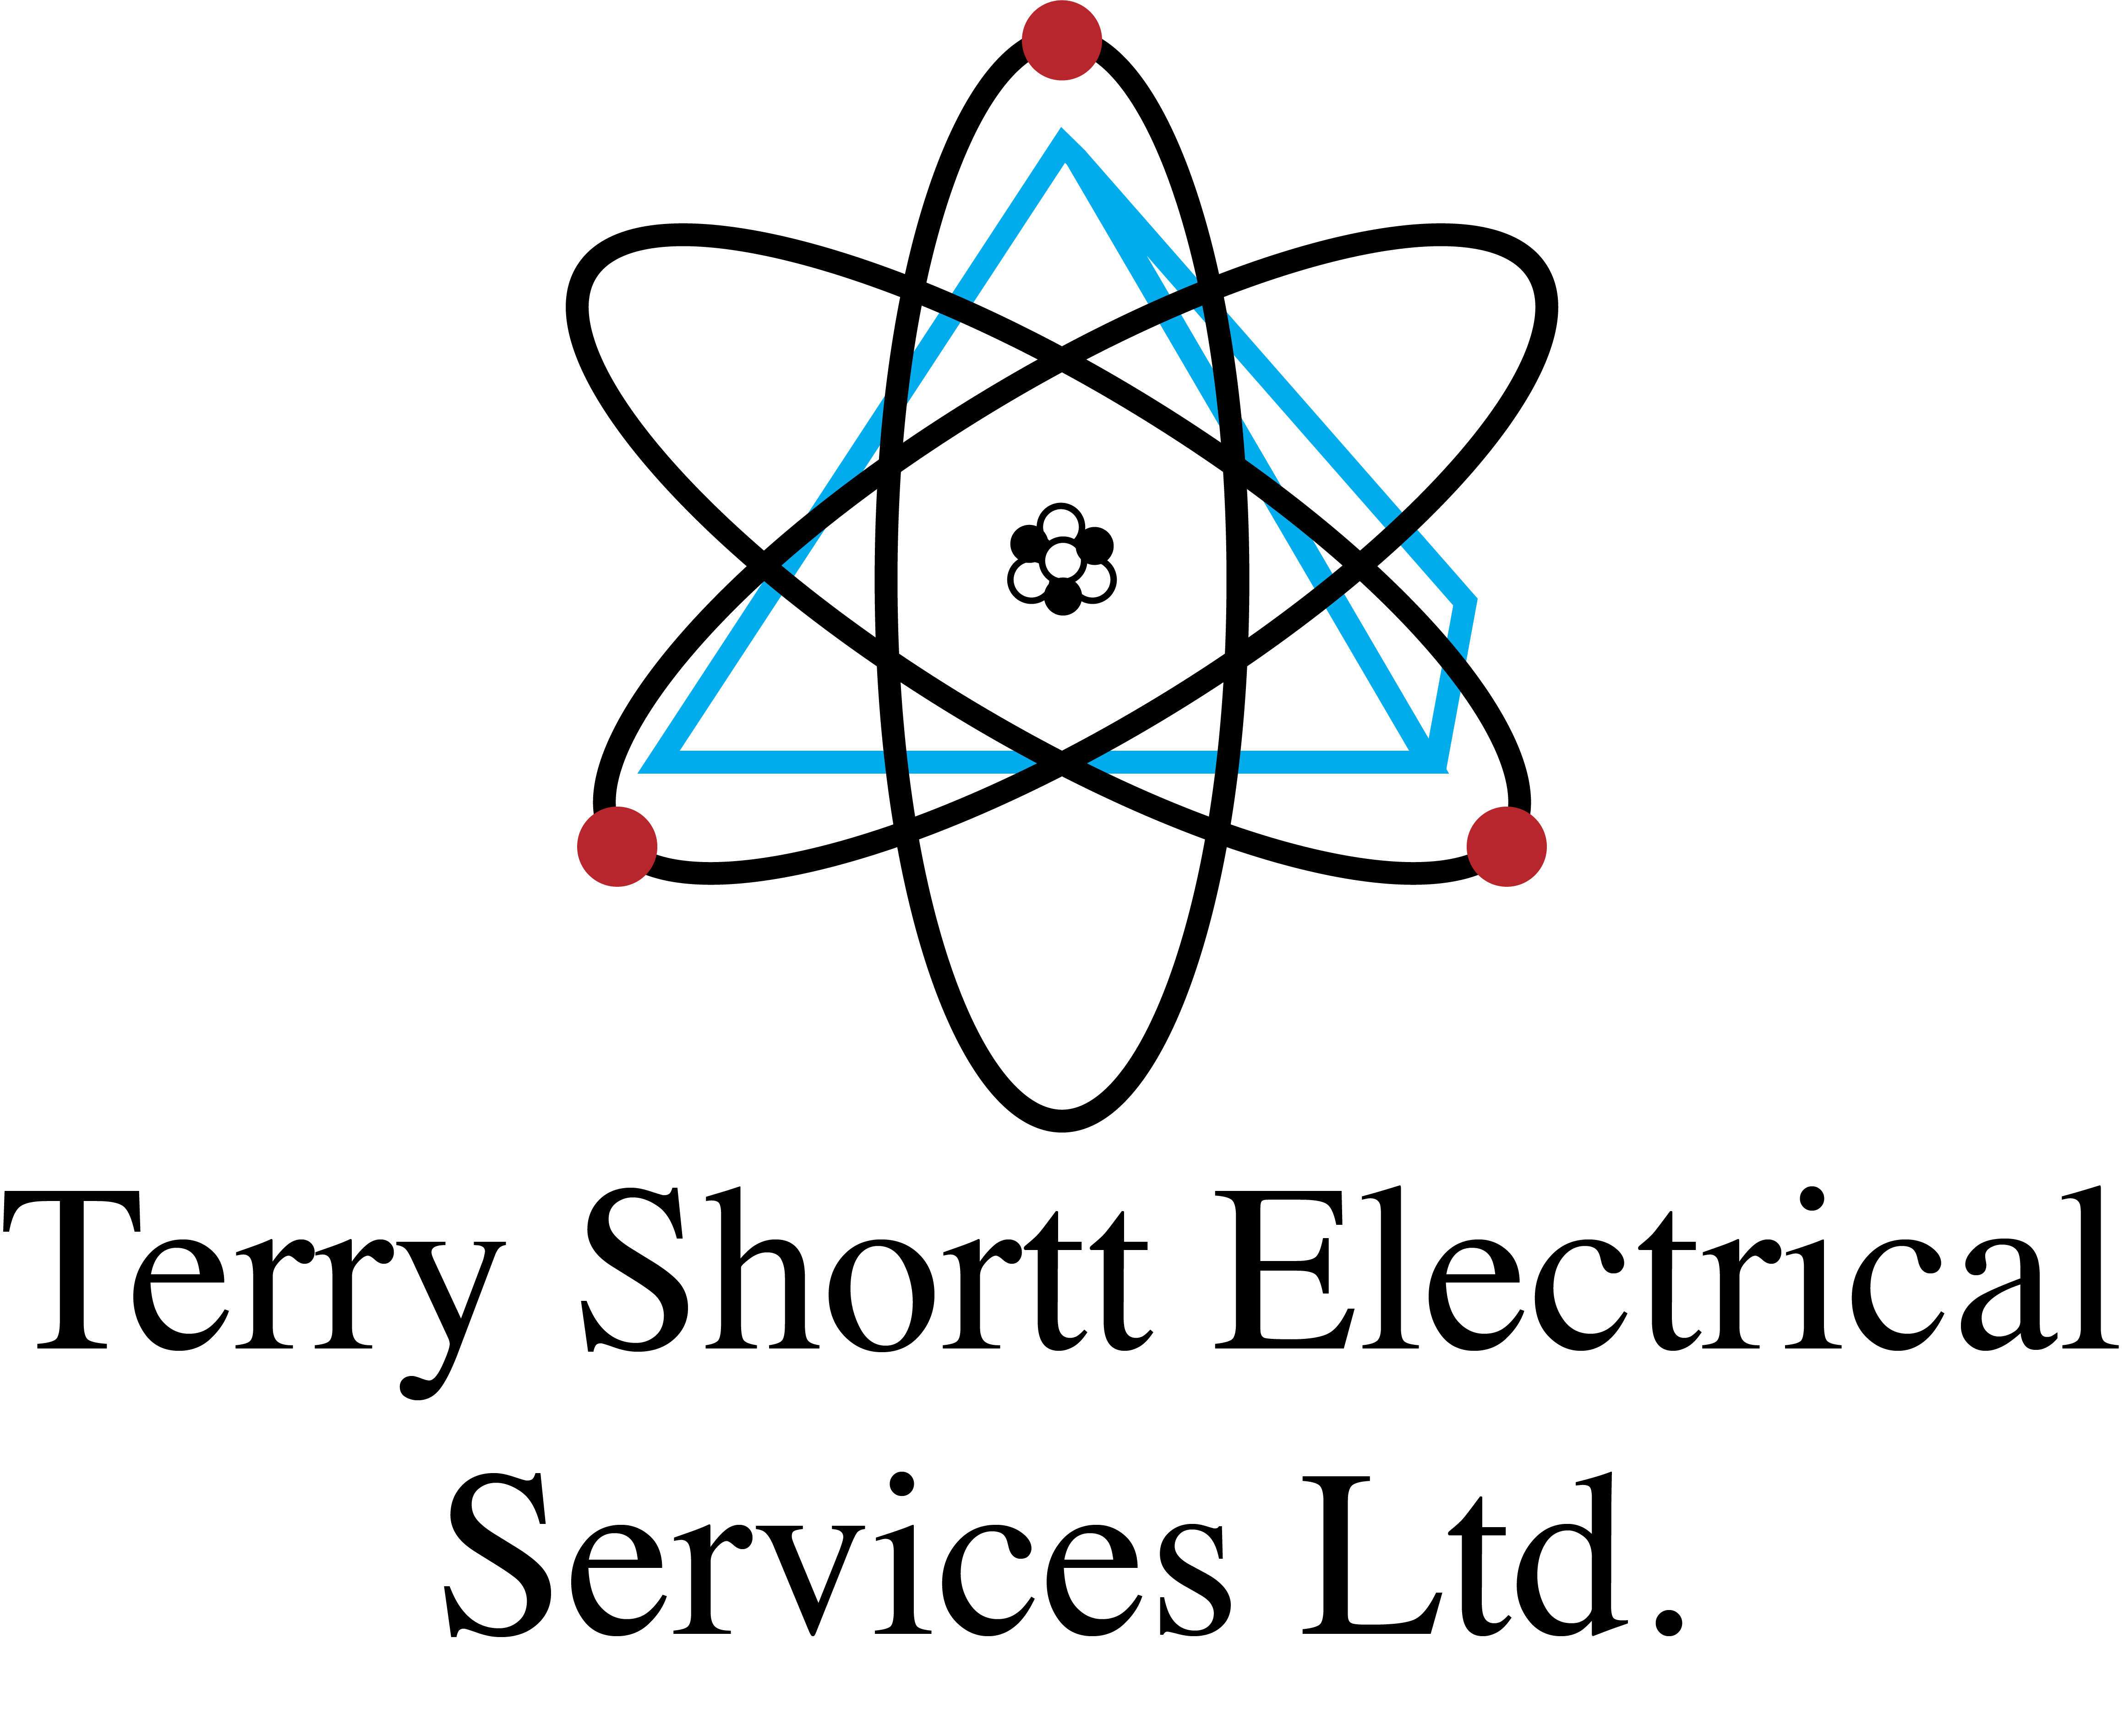 Terry Shortt Electrical Services Ltd.